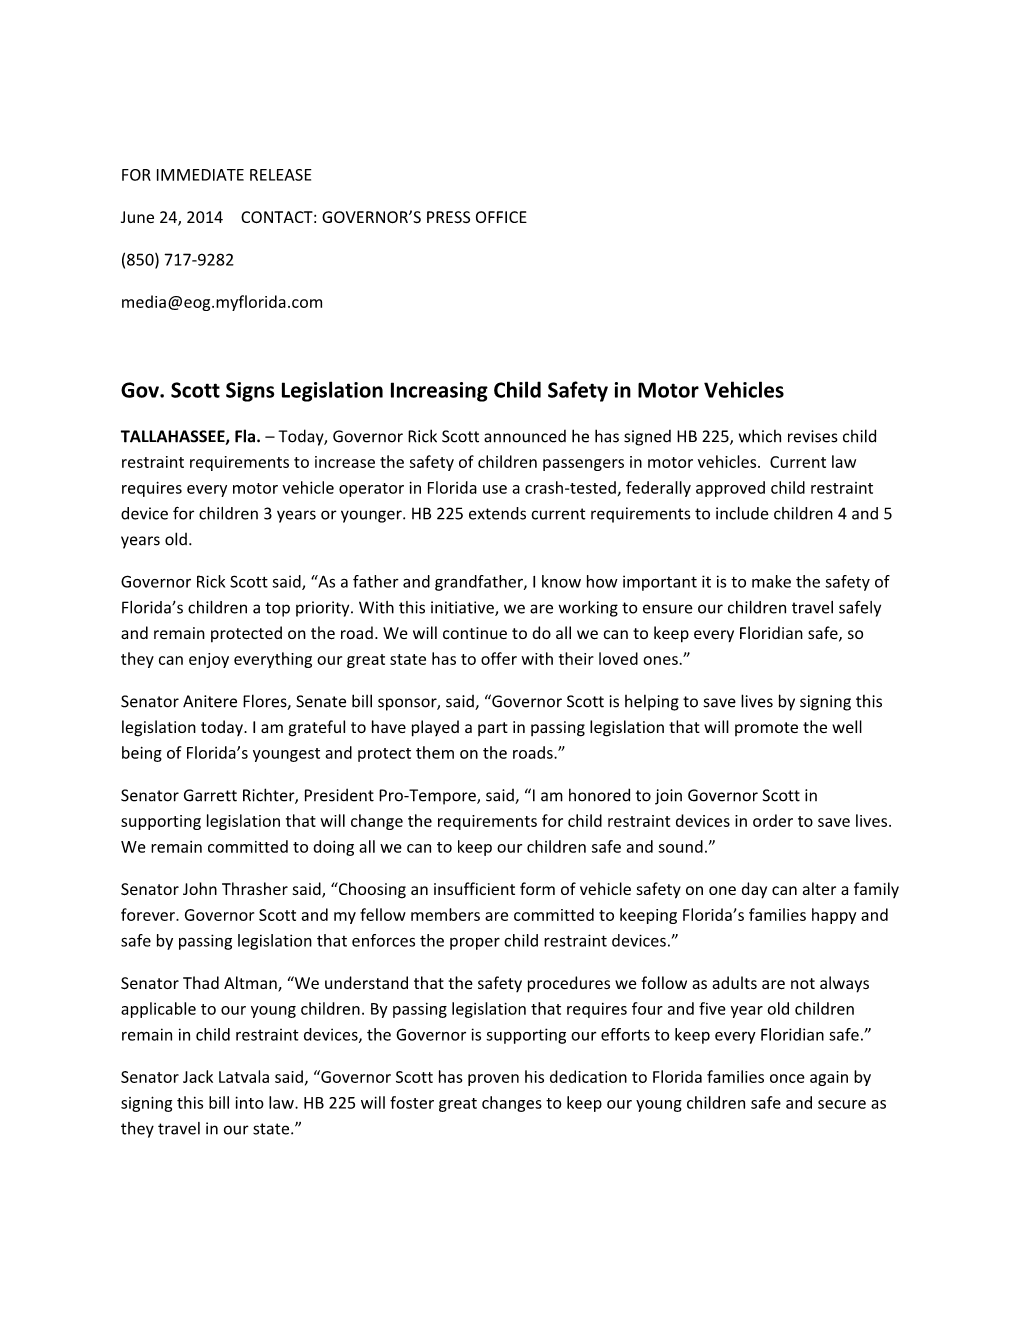 Gov. Scott Signs Legislation Increasing Child Safety in Motor Vehicles